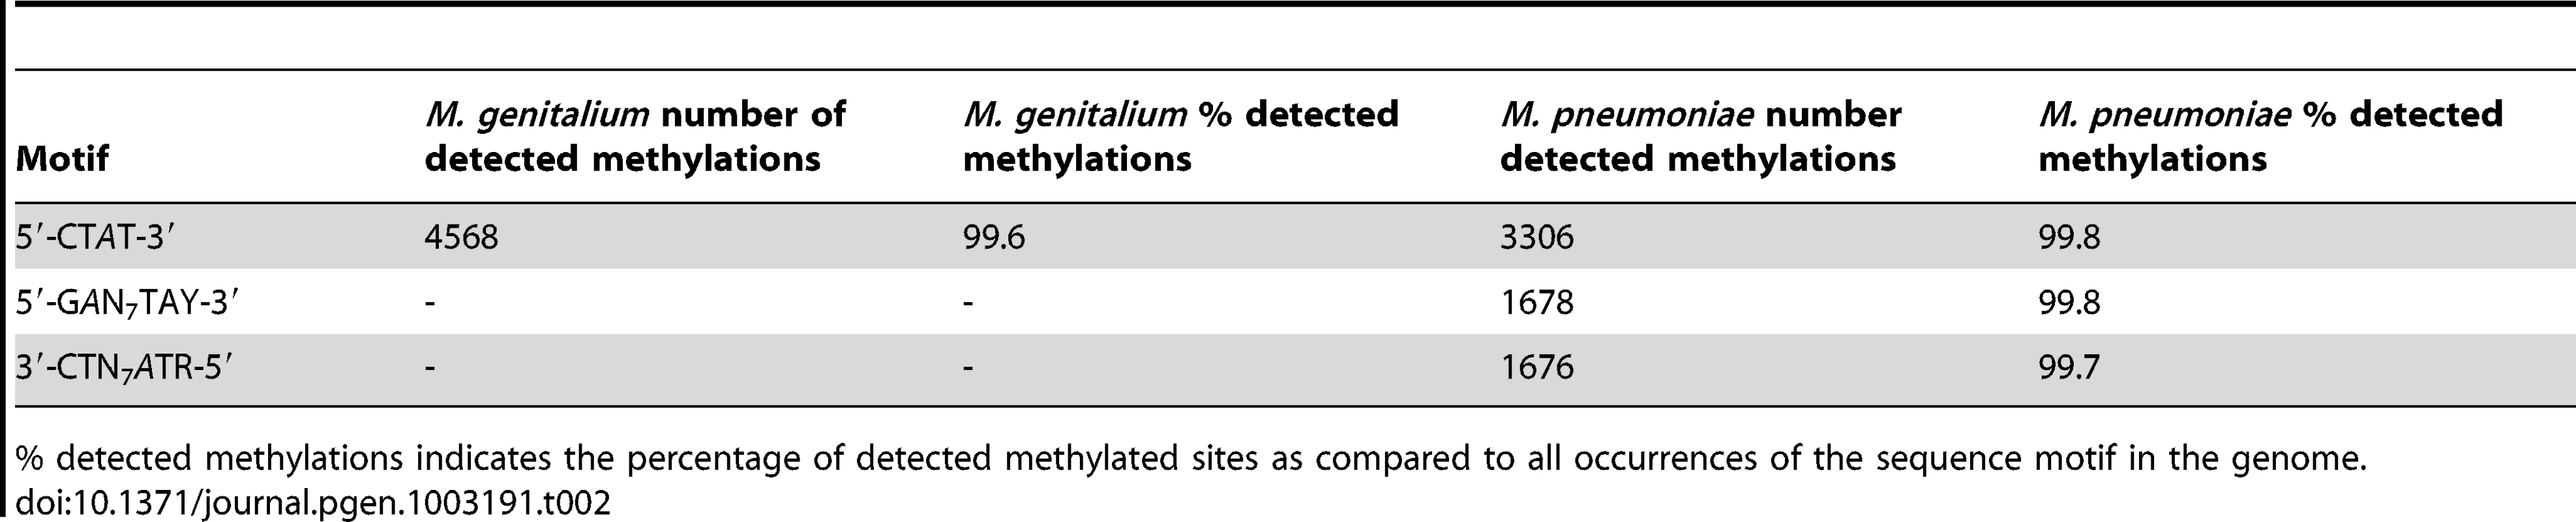 Summary of discovered methylation motifs in <i>M. genitalium</i> and <i>M.pneumoniae</i>.